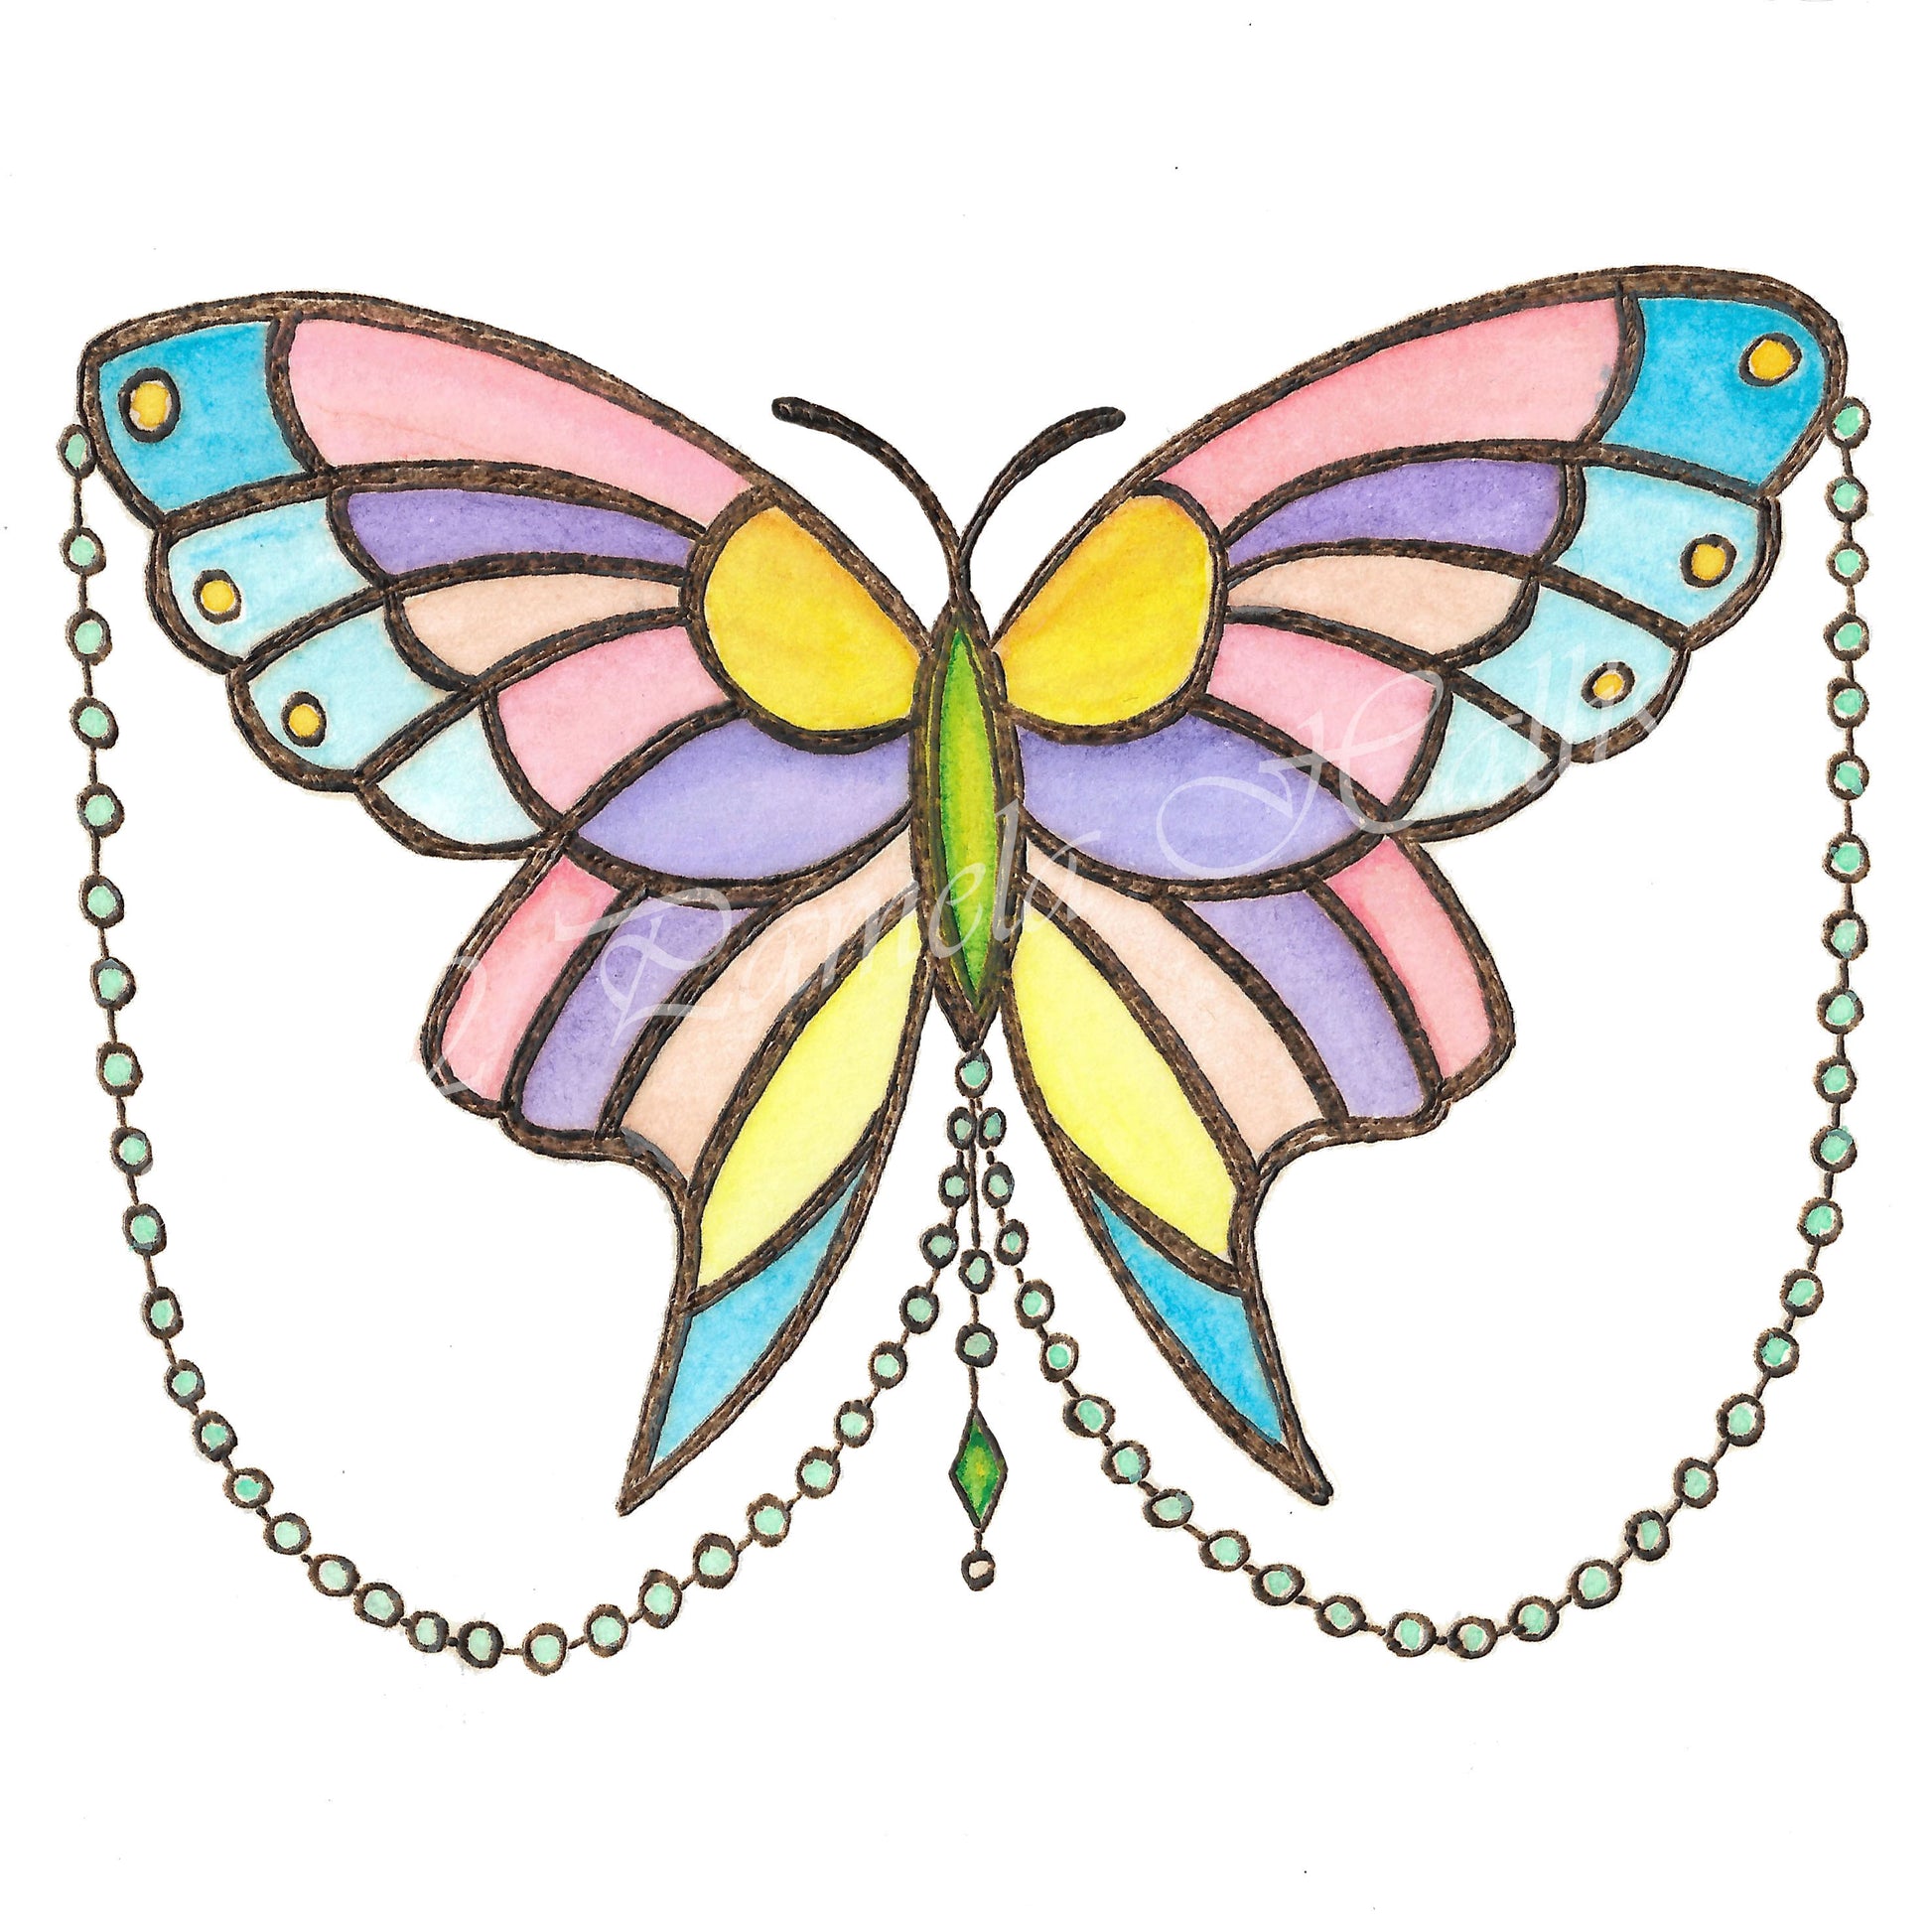 Butterfly Art Giclee by Pamela Hallisey - 4x4 art print.